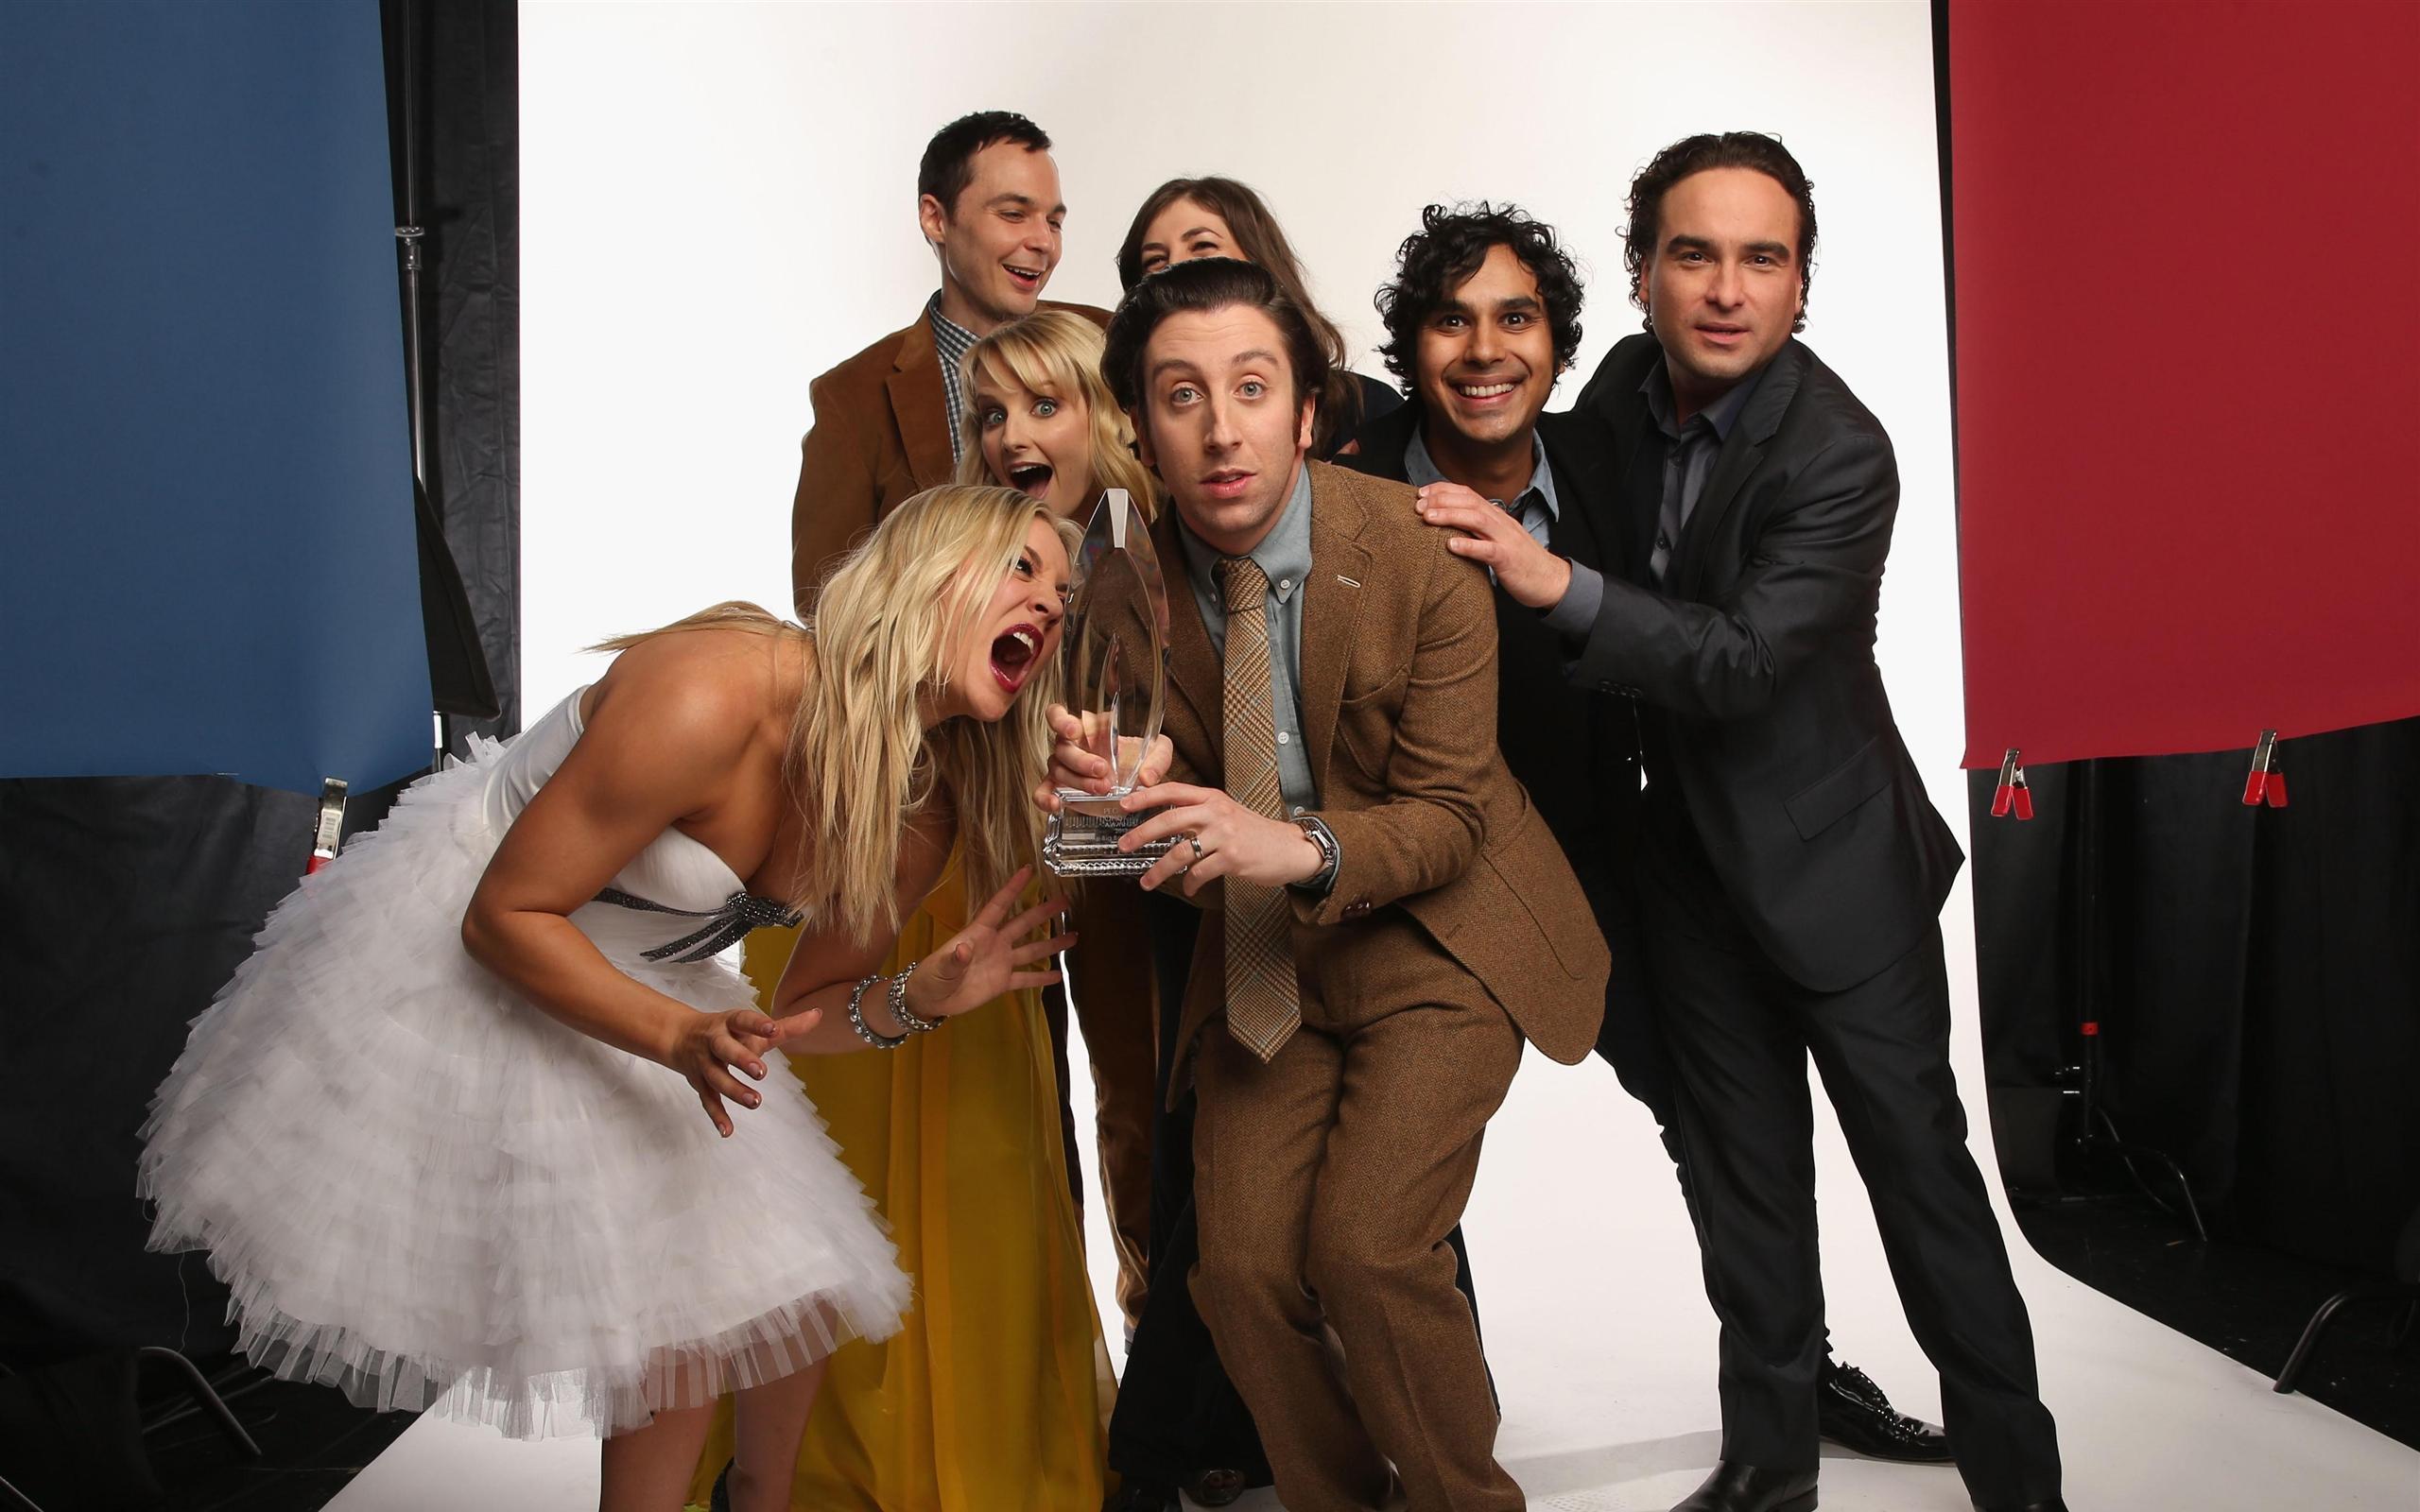 TV Show The Big Bang Theory Wallpaper 2560x1600 px Free Download